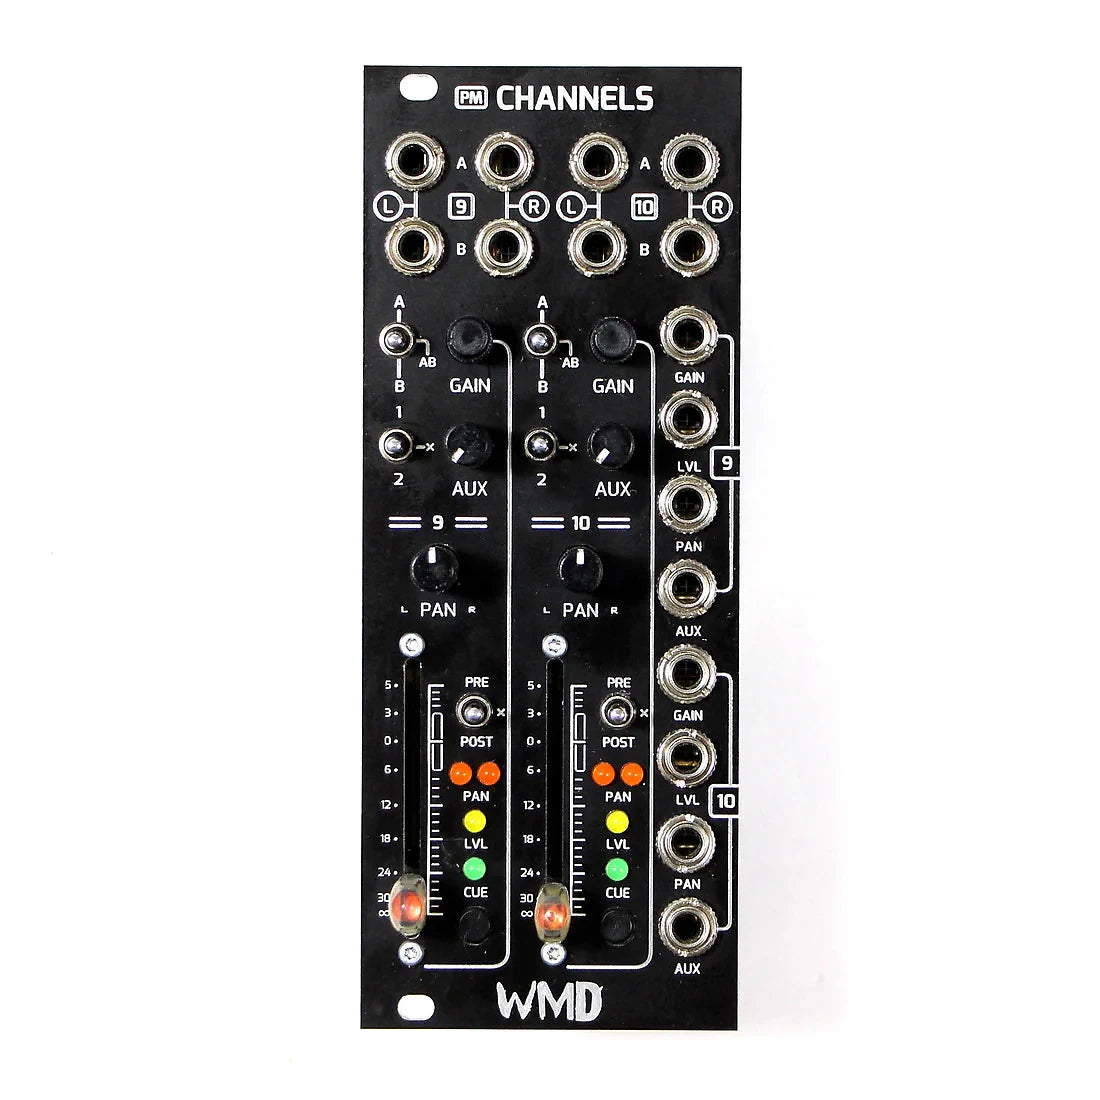 WMD Performance Mixer + PM Channels Expander